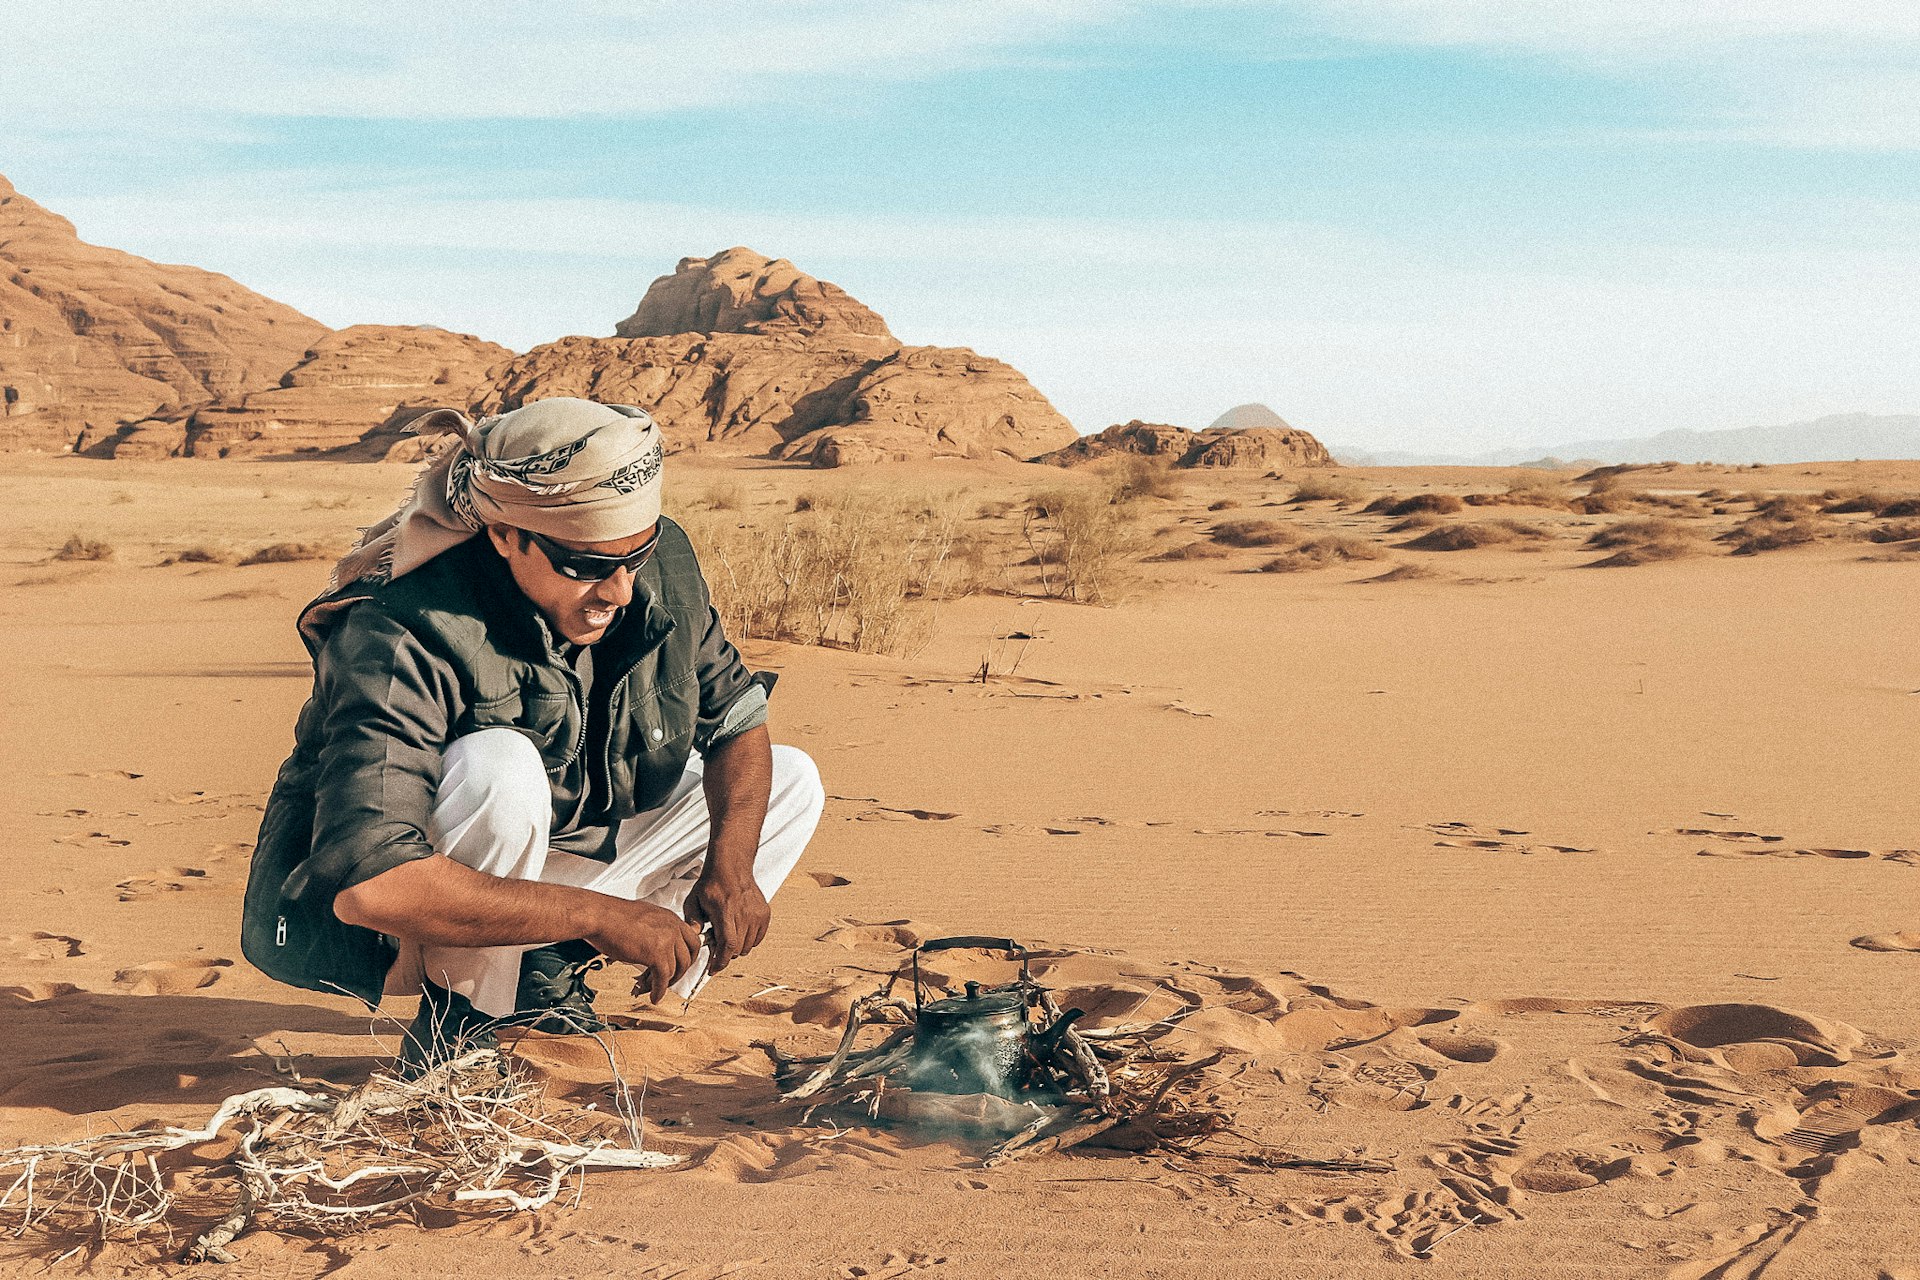 A man squats in desert sand, tending to a fire